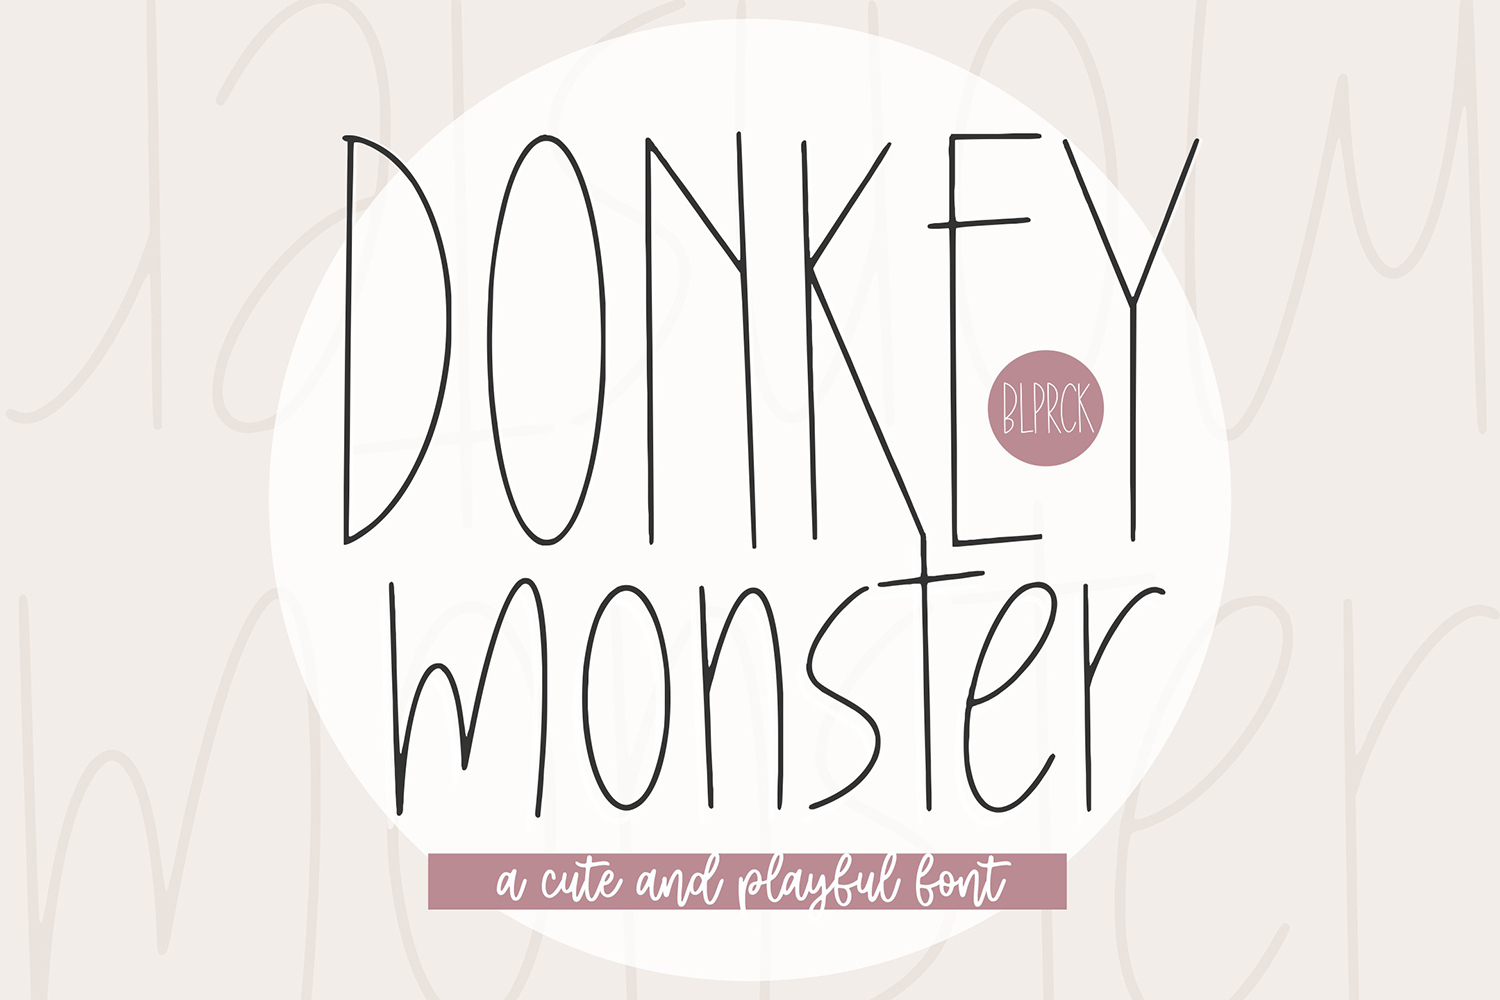 Donkey Monster Free Font